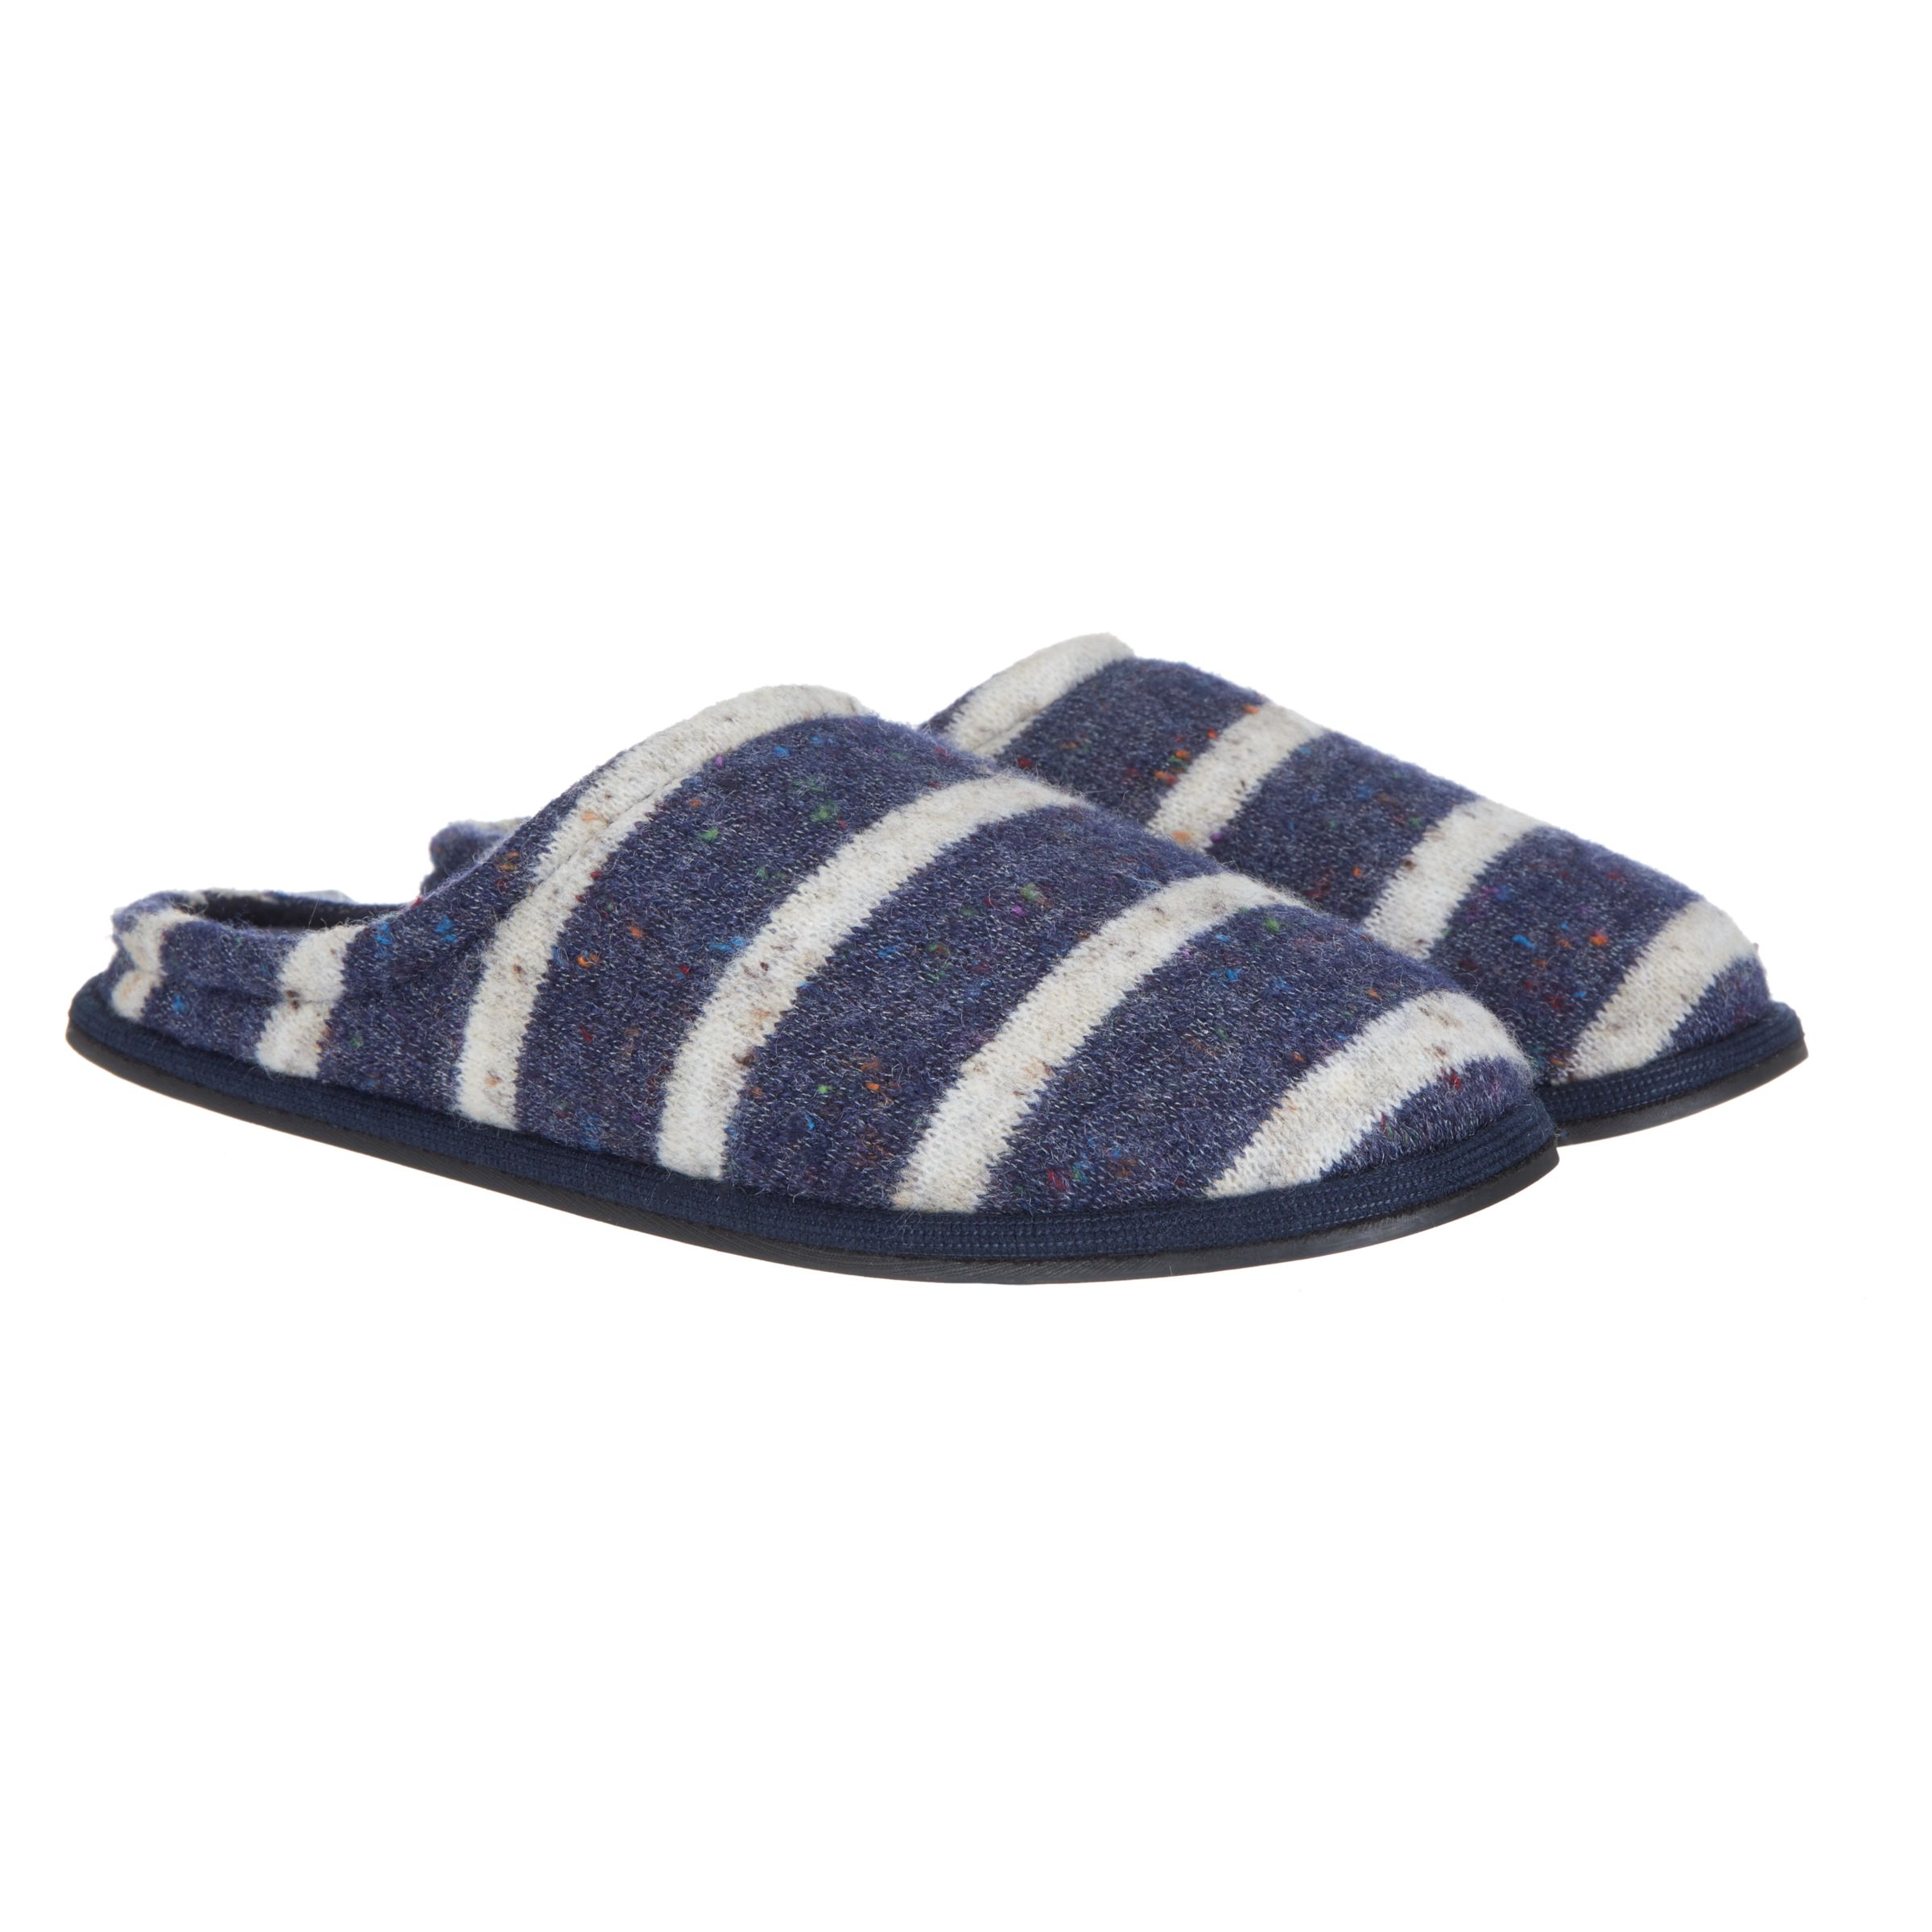 John Lewis & Partners Fleck Stripe Mule Slippers, Blue/White, S